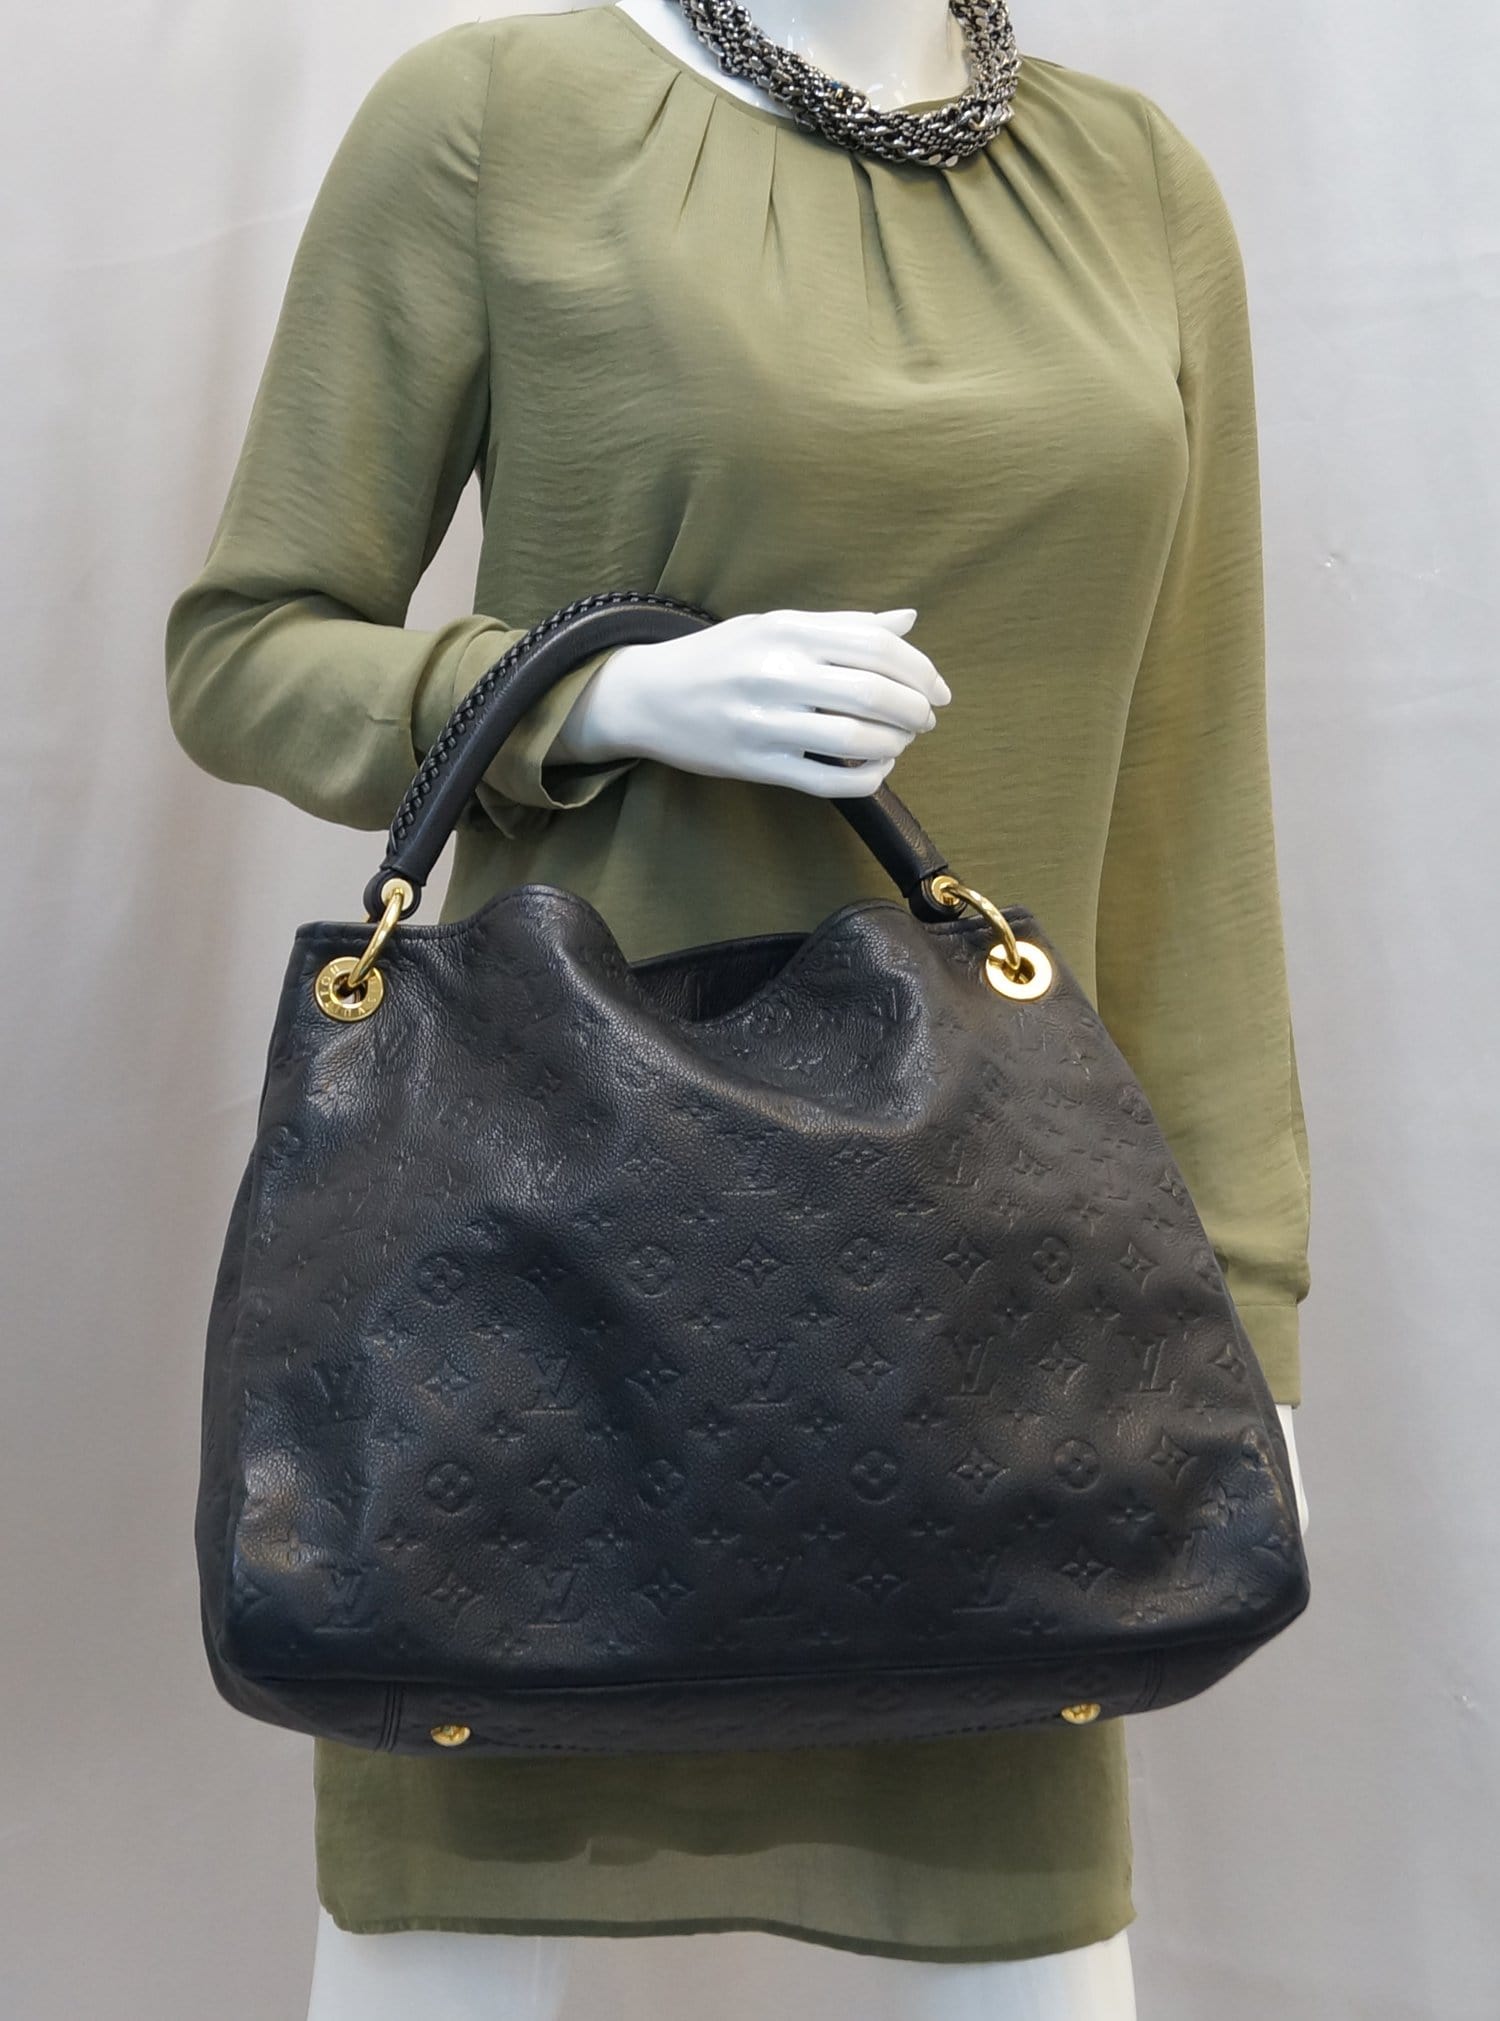 Louis Vuitton Artsy Medium Model Shopping Bag in Blue Empreinte